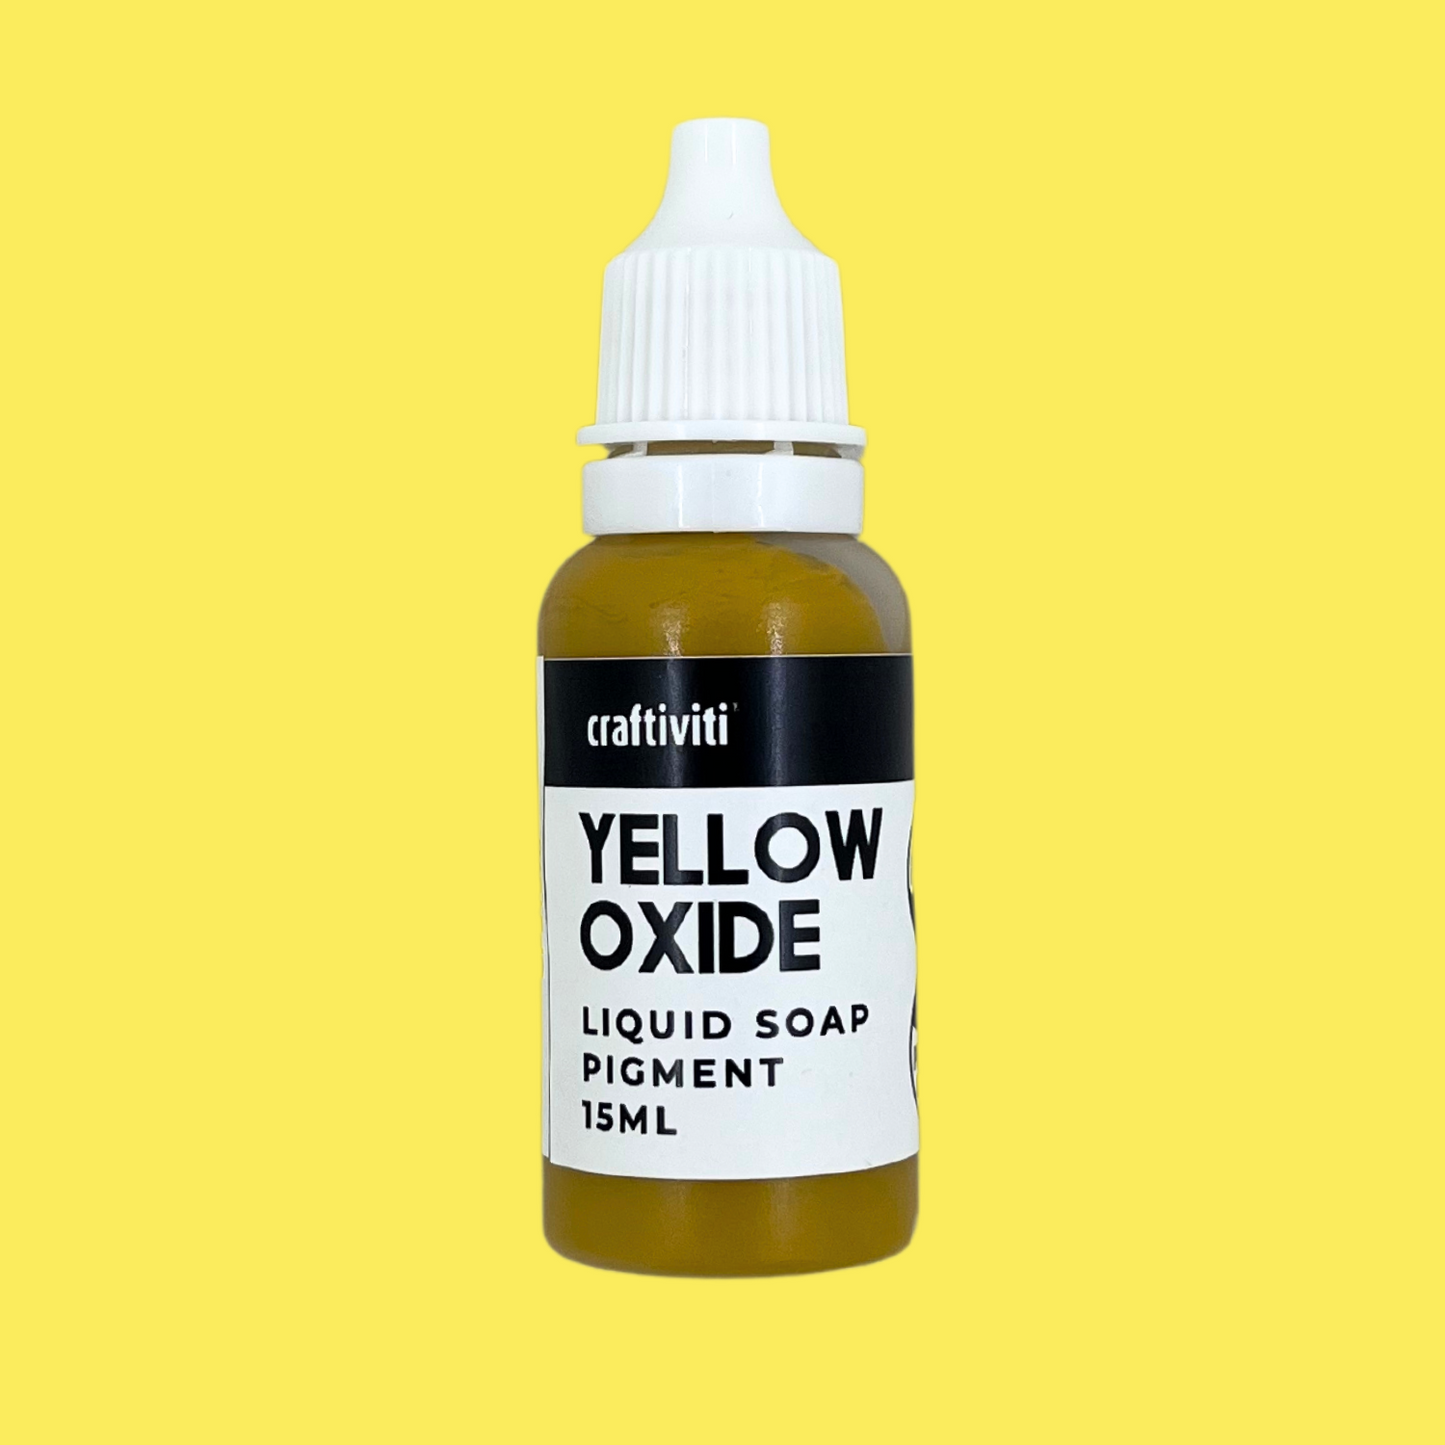 Liquid Soap Pigment 15ml - Yellow Oxide